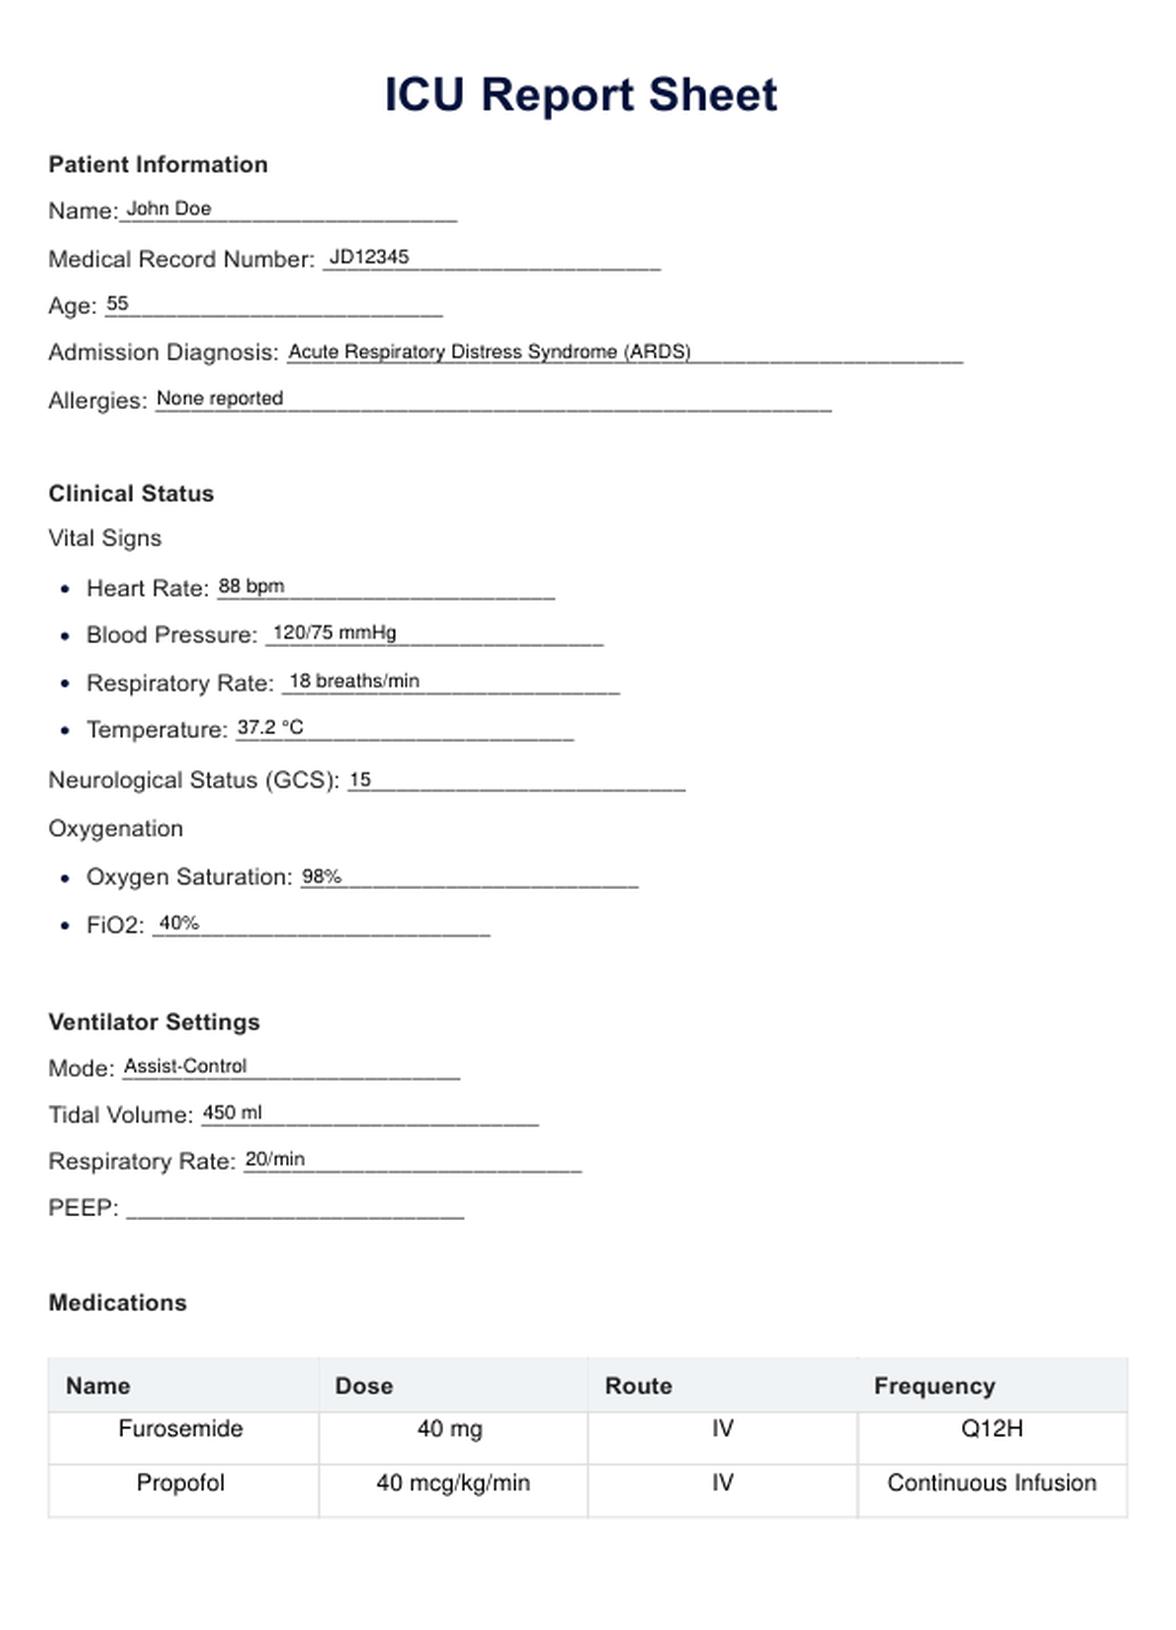 ICU Report Sheet Template PDF Example